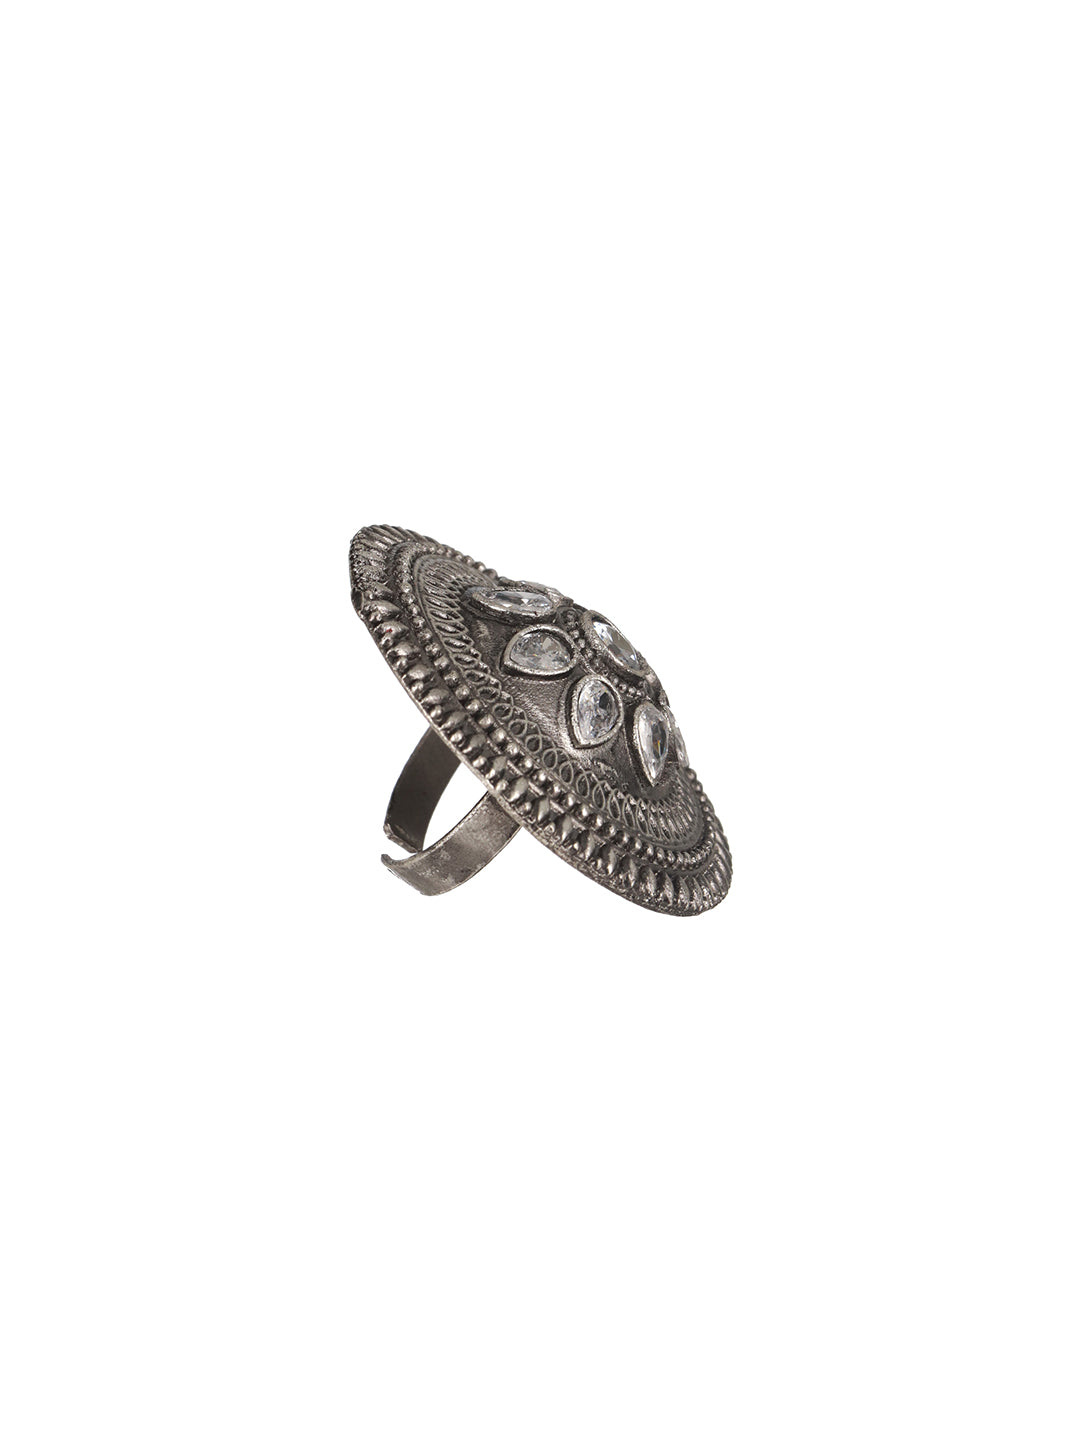 Oxidized Silver-Toned & White Stone-Studded Adjustable Finger Ring